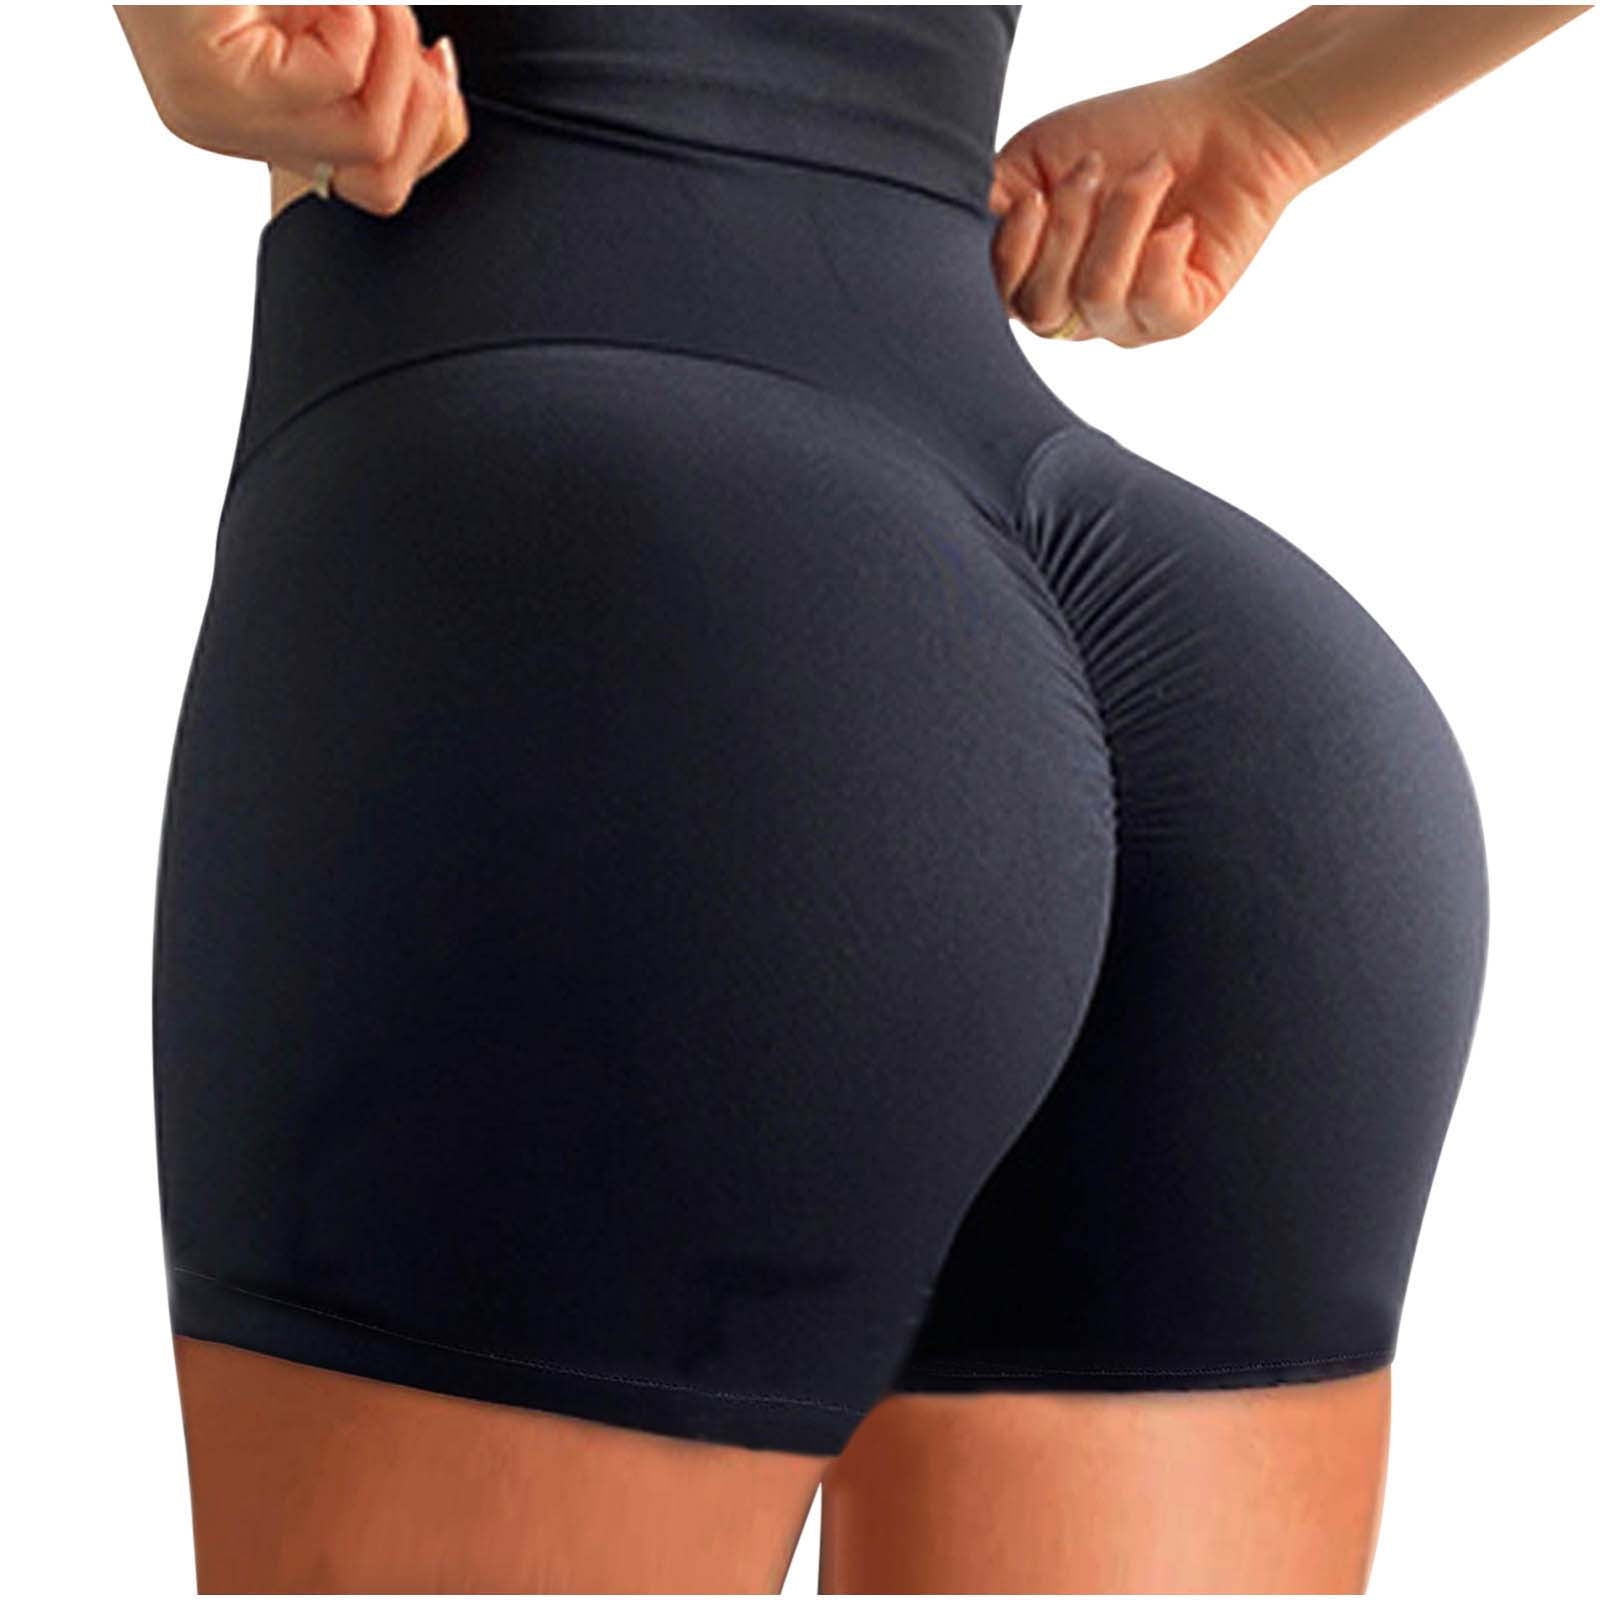 HAPIMO Discount Women's Hip Lifter Shapewear Control Panties High